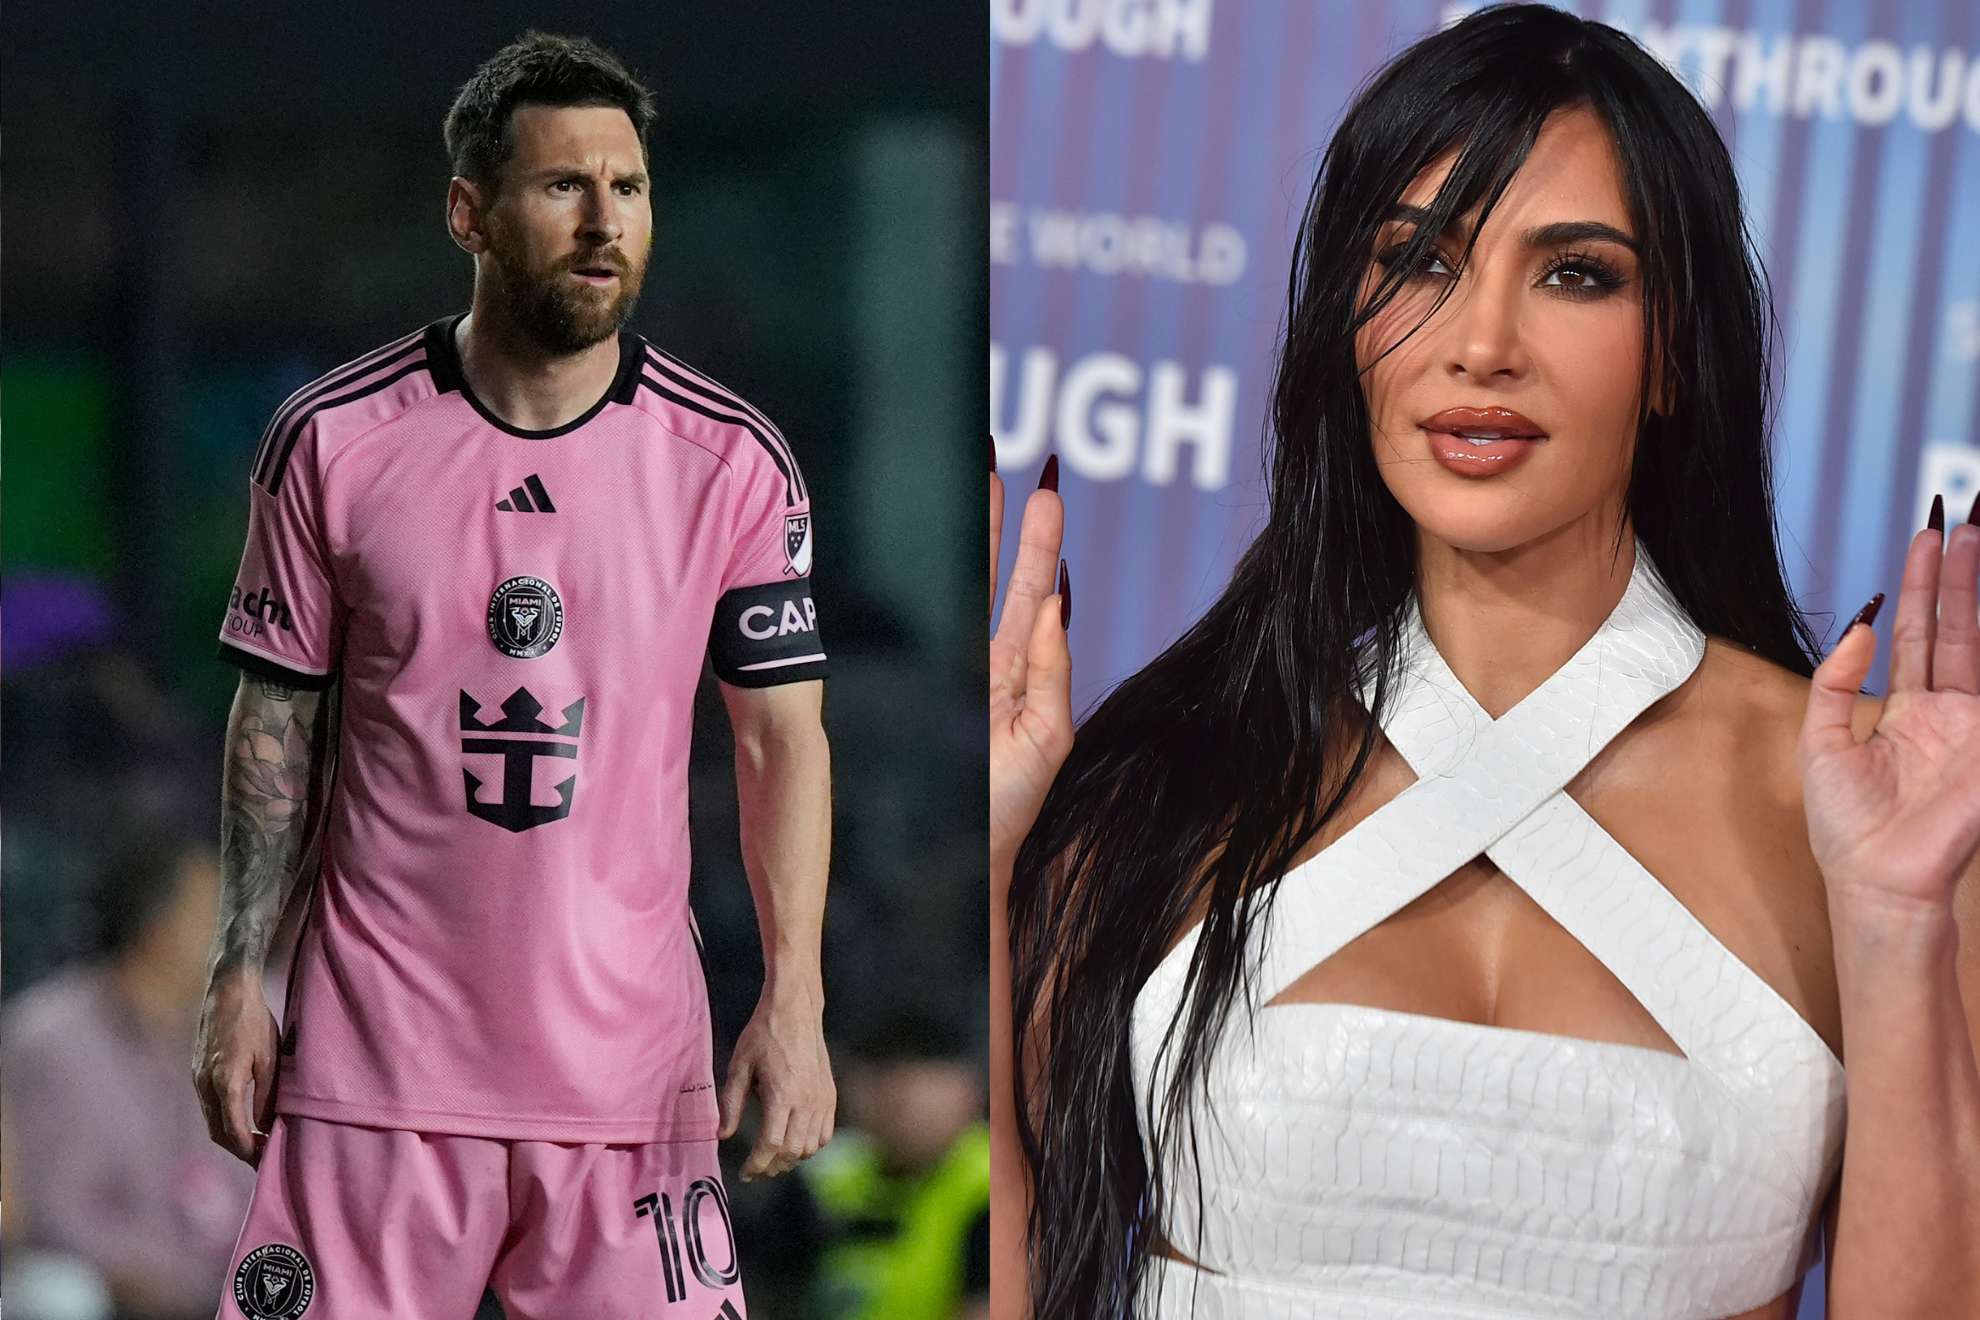 Kim Kardashian shows her love for Lionel Messi in latest Instagram post